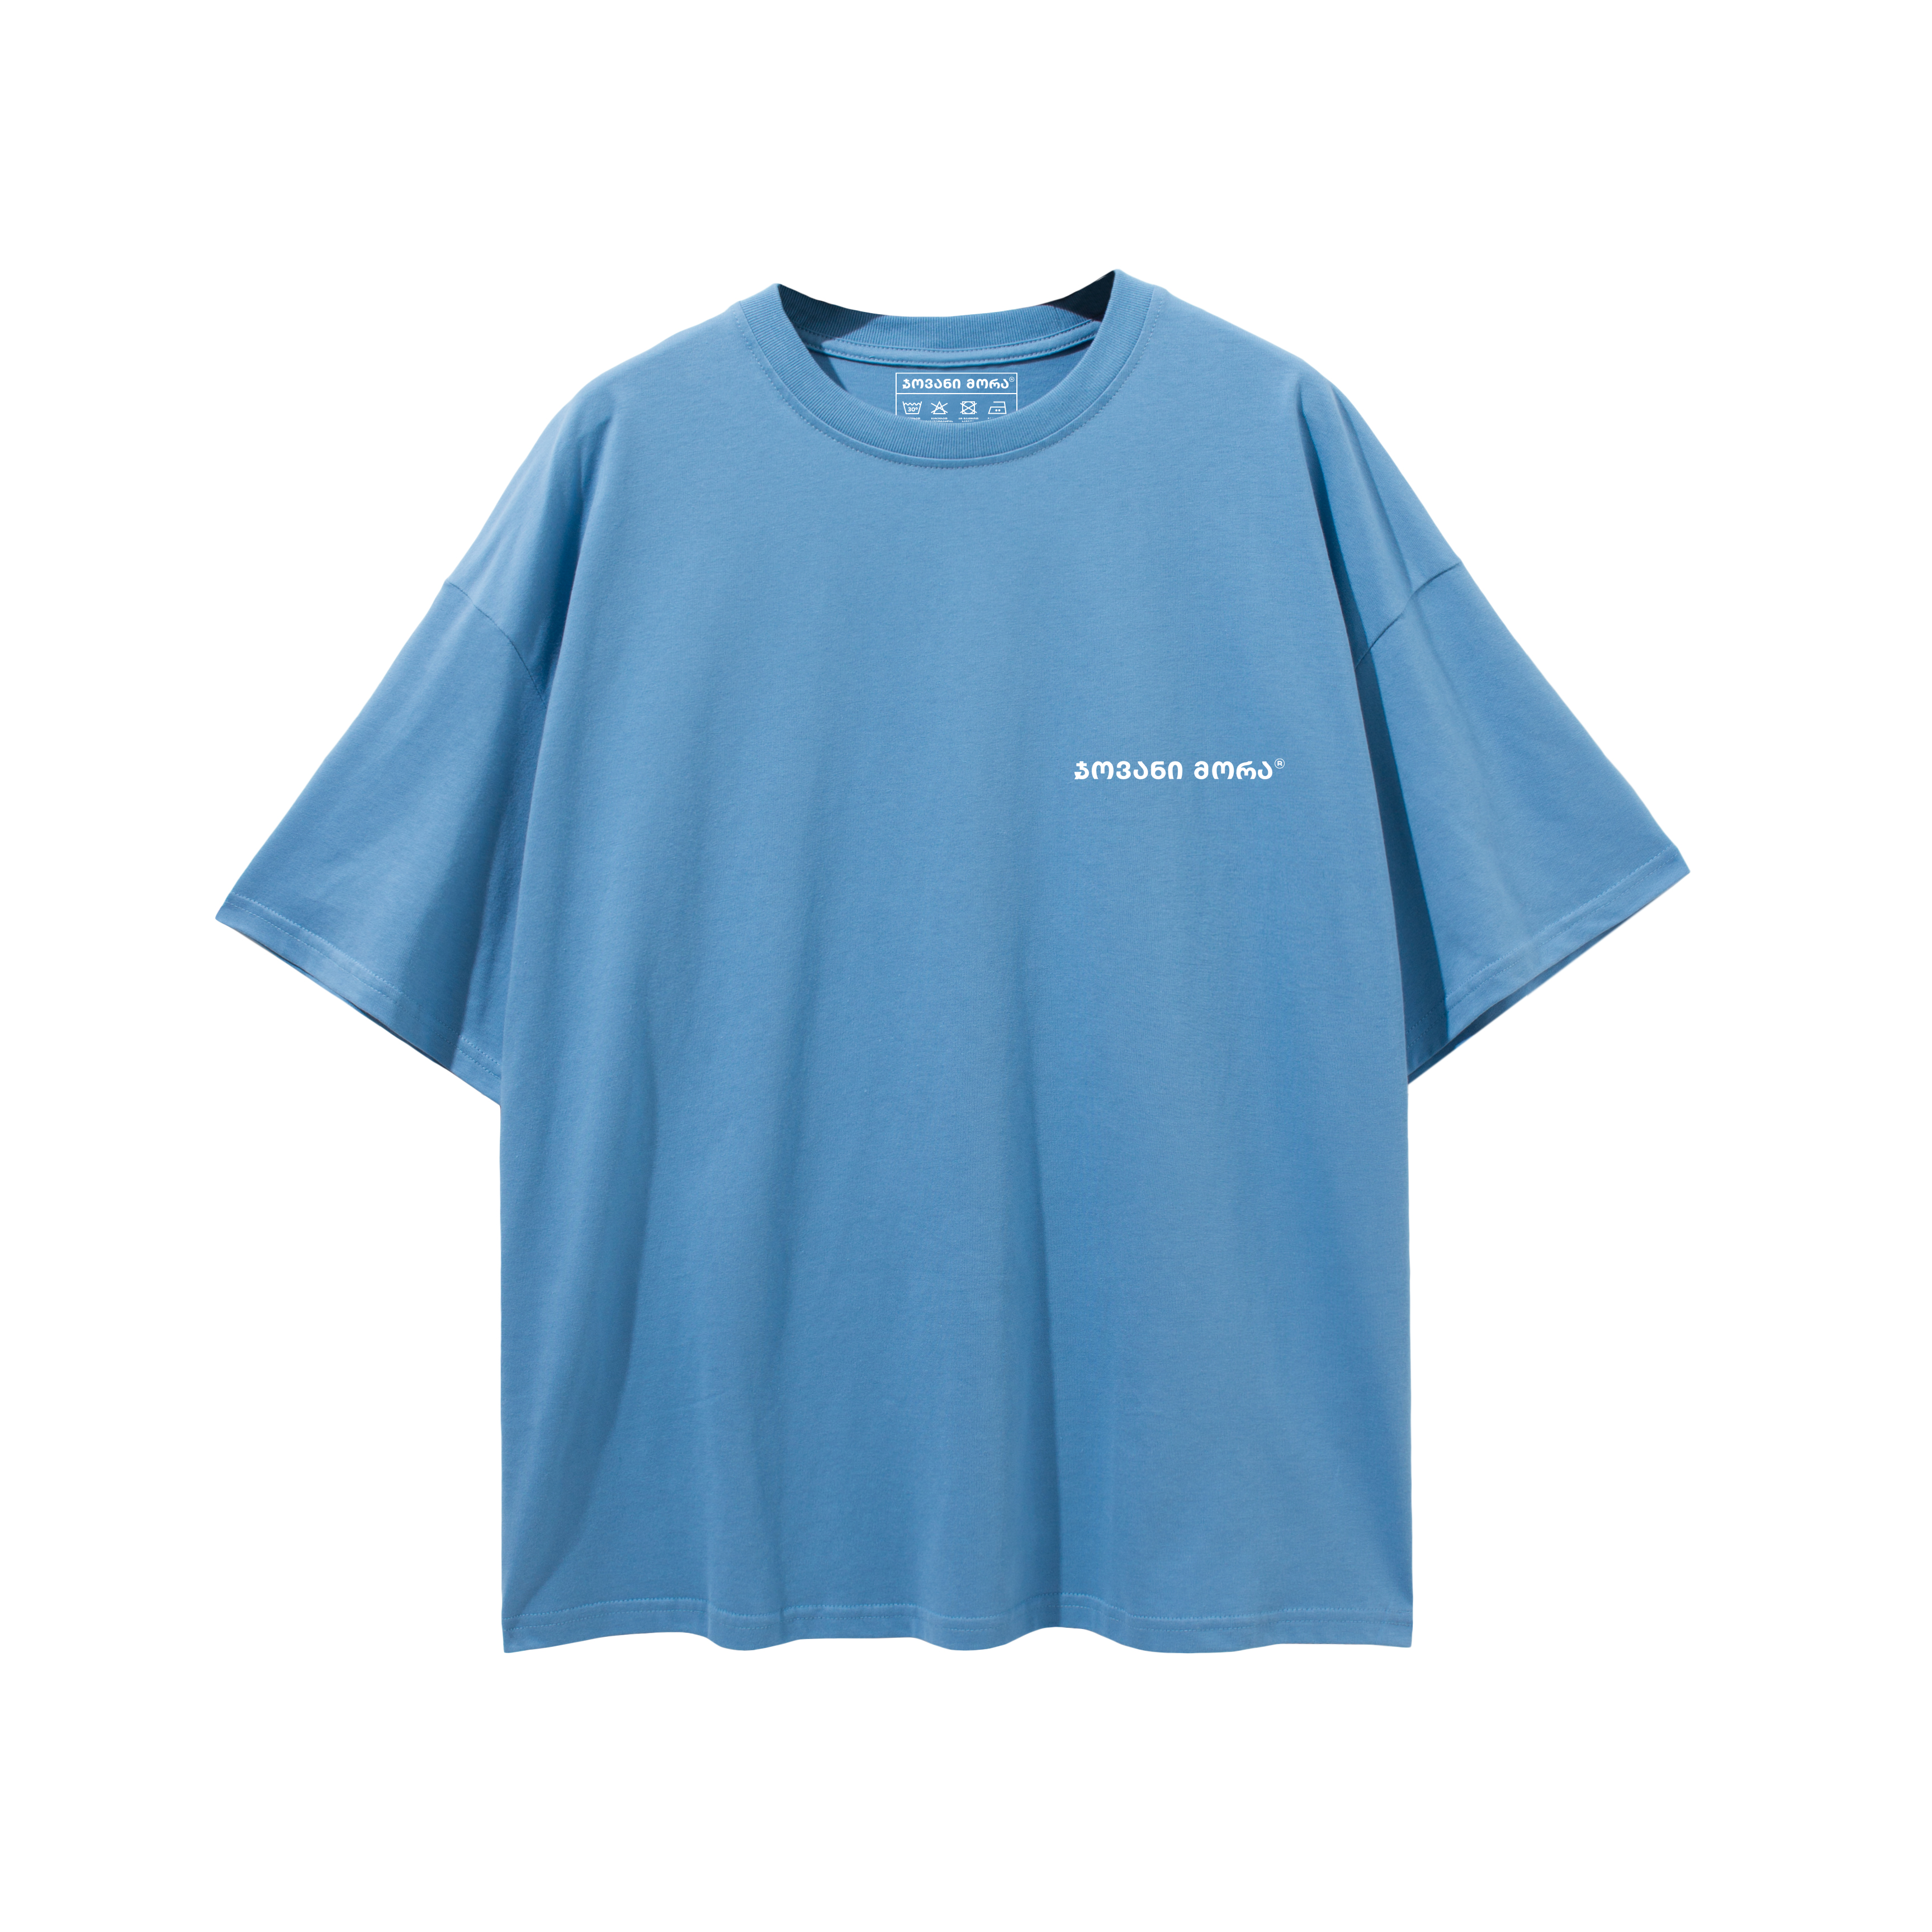 T-shirt (Blue), Oversized Fit